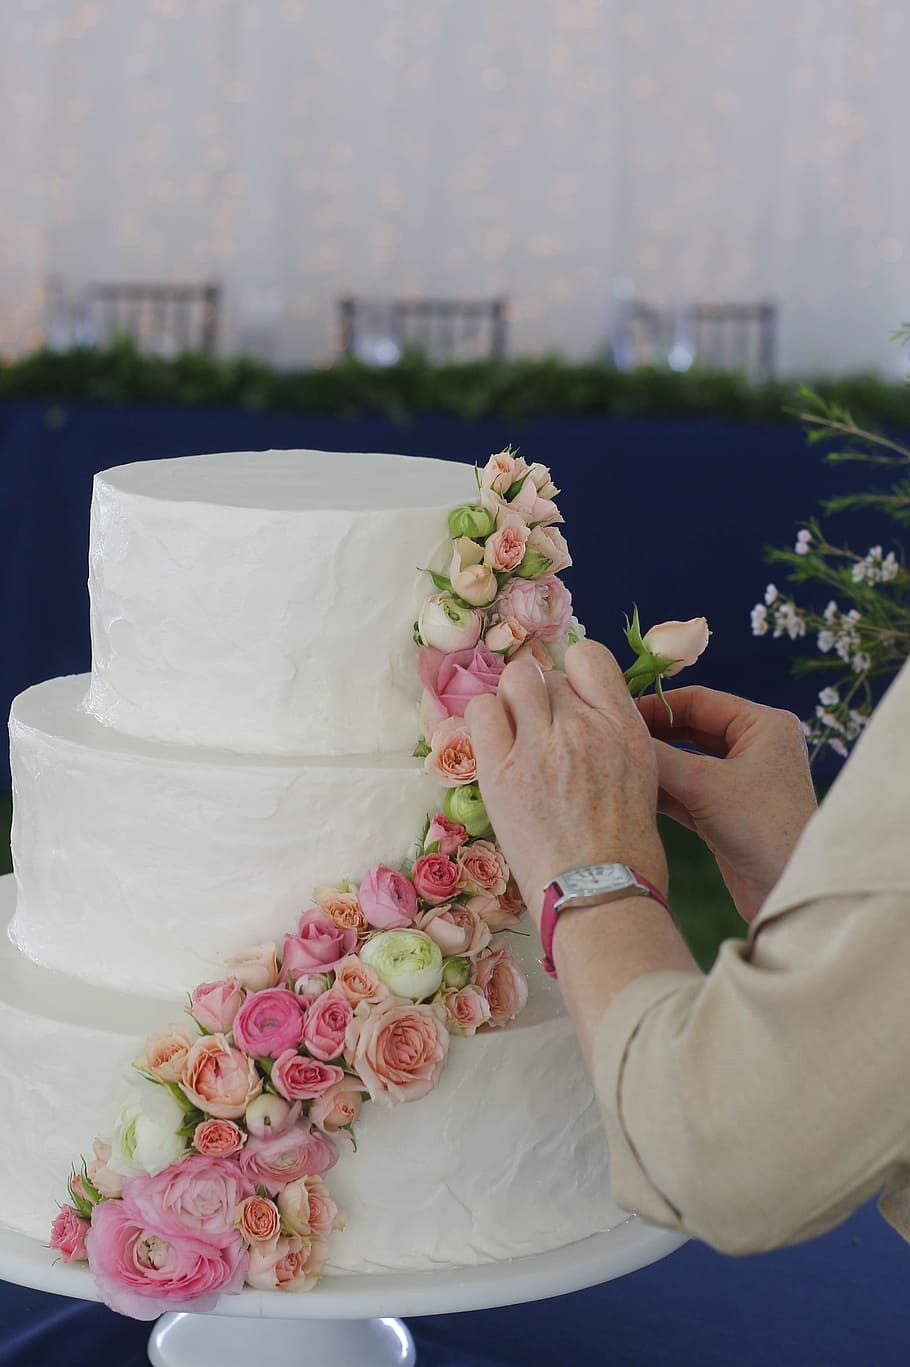 wedding cake, wedding flowers, cake, dessert, icing, flowers, human hand, hand, real people, holding